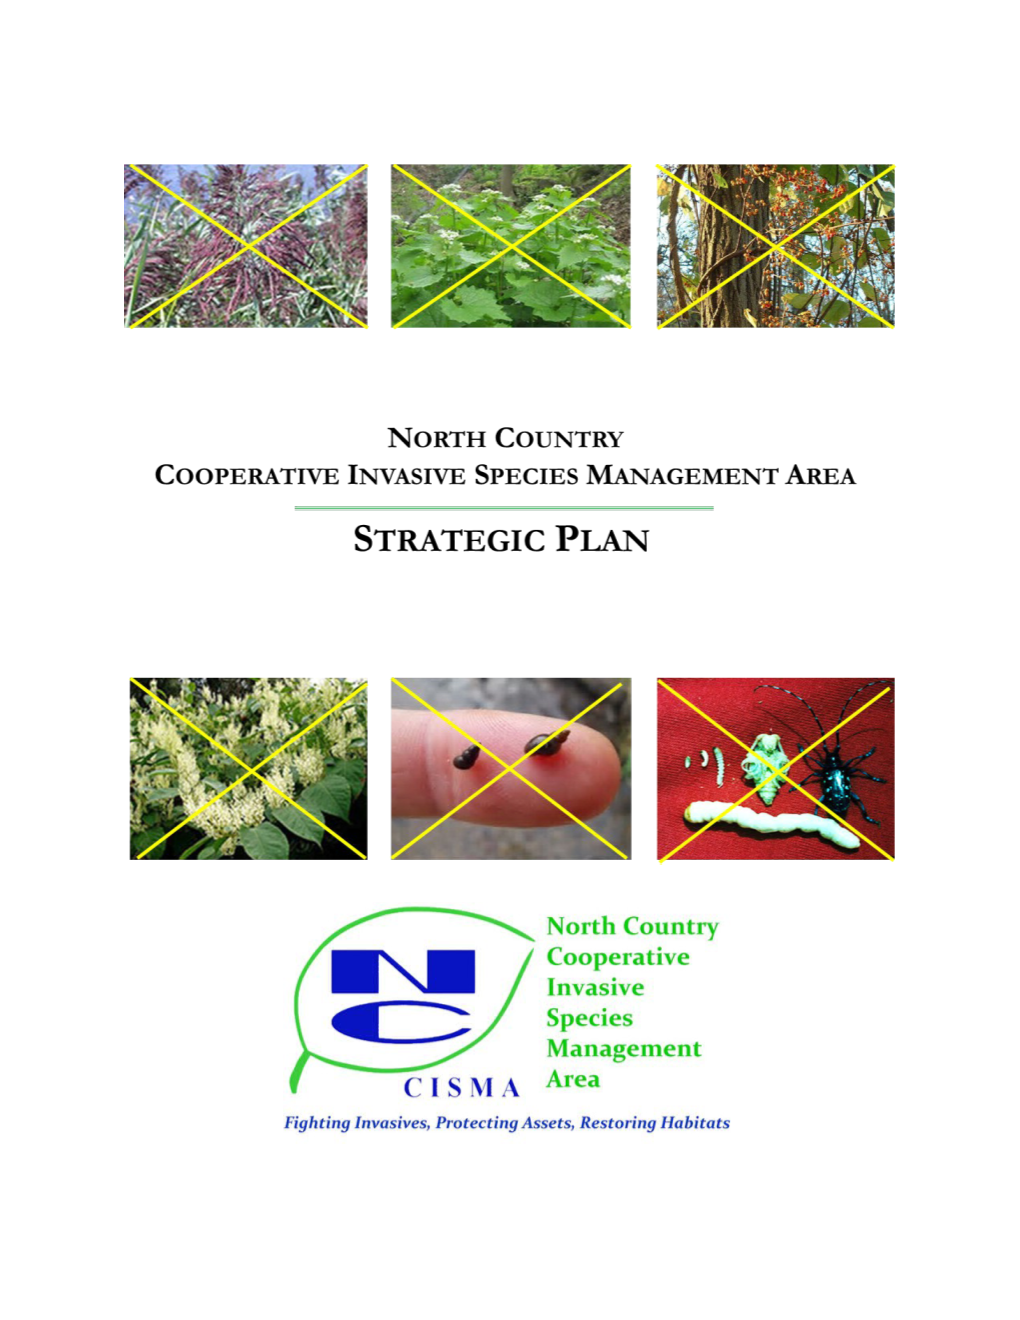 Cooperative Invasive Species Management Area